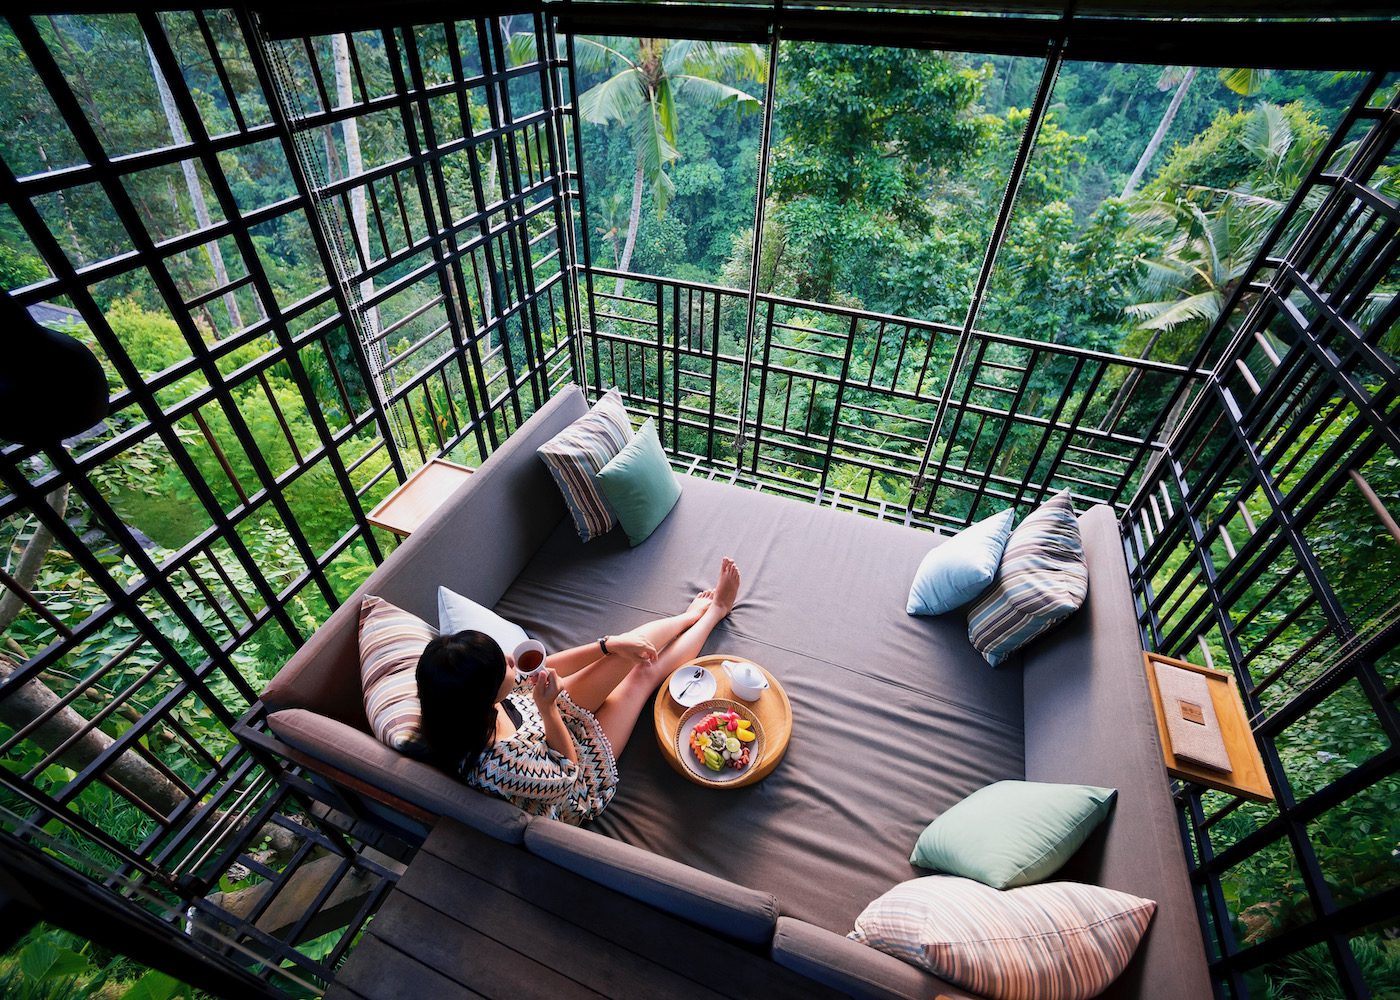 004HOSHINOYA-Bali-a-Japanese-hotel-and-villa-resort-where-to-stay-in-Ubud-Indonesia